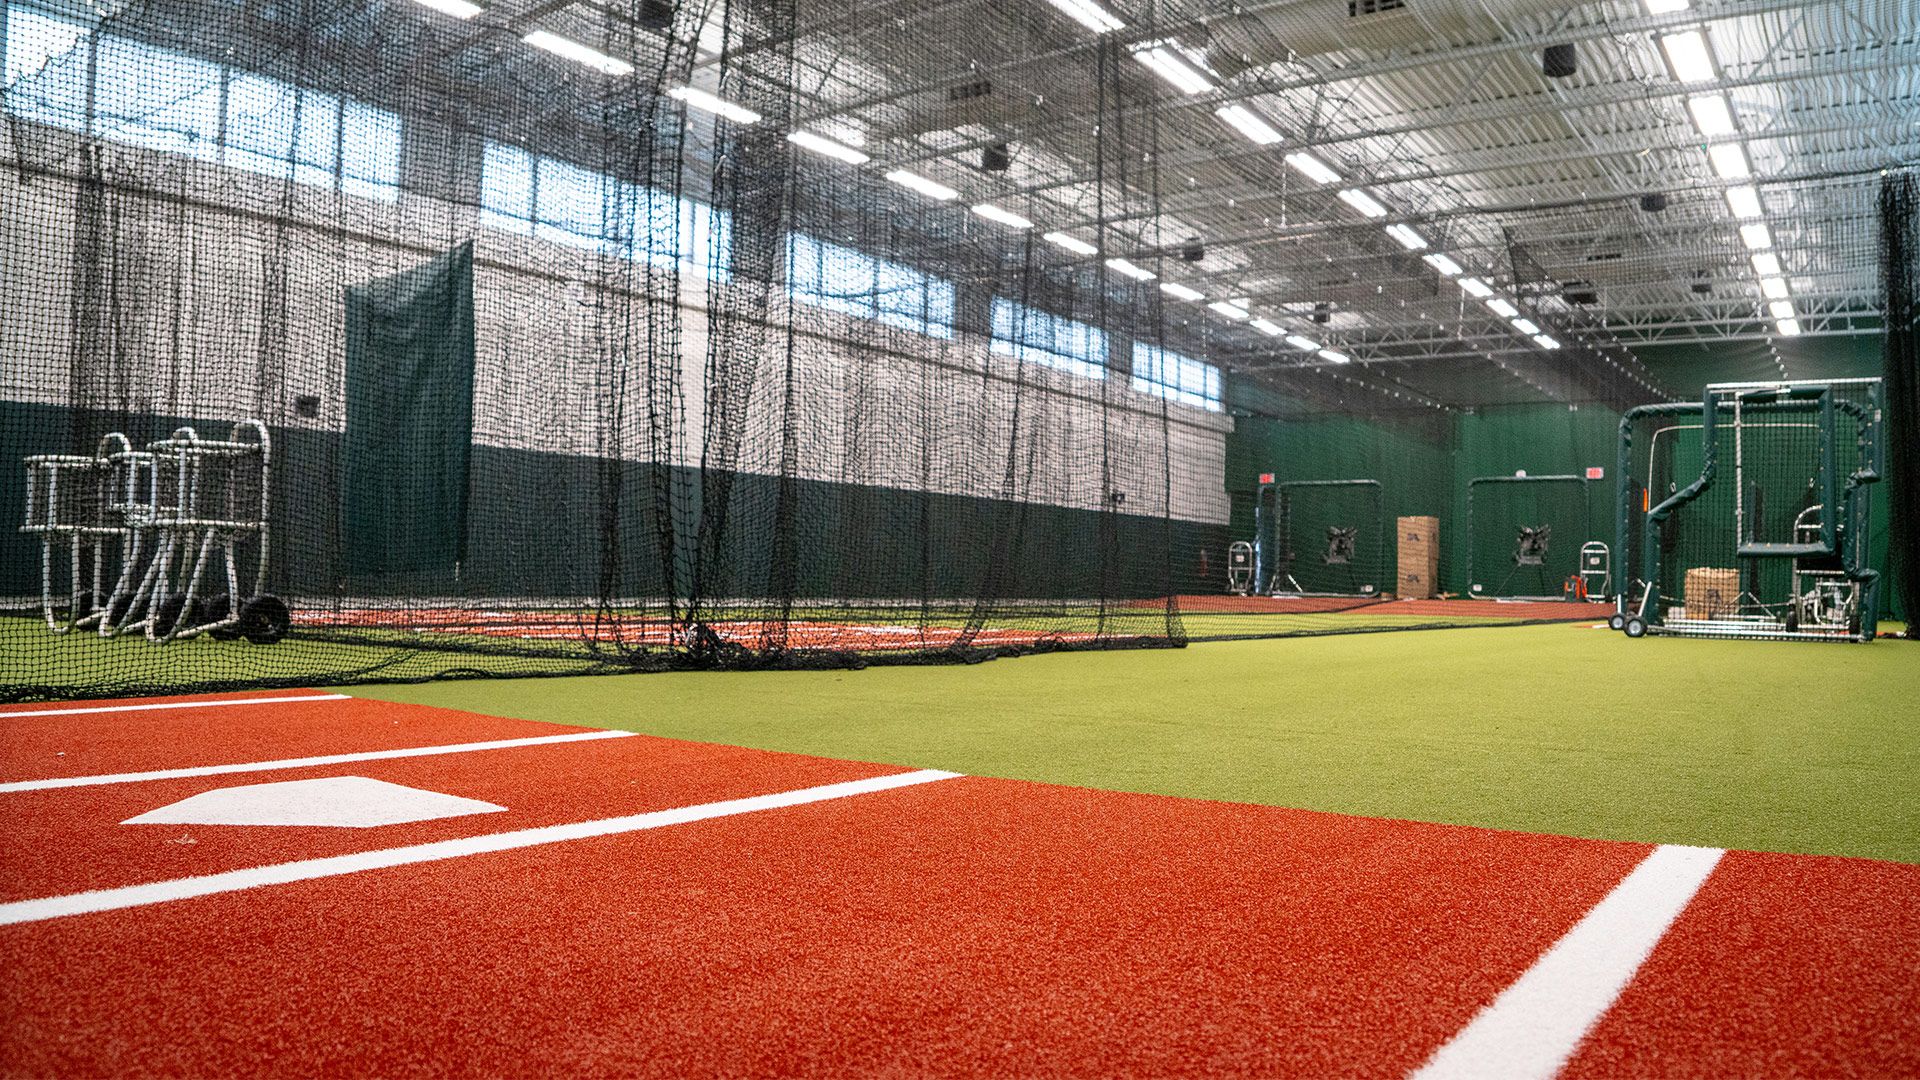 Klotz Center a "Game Changer" for Canes Baseball